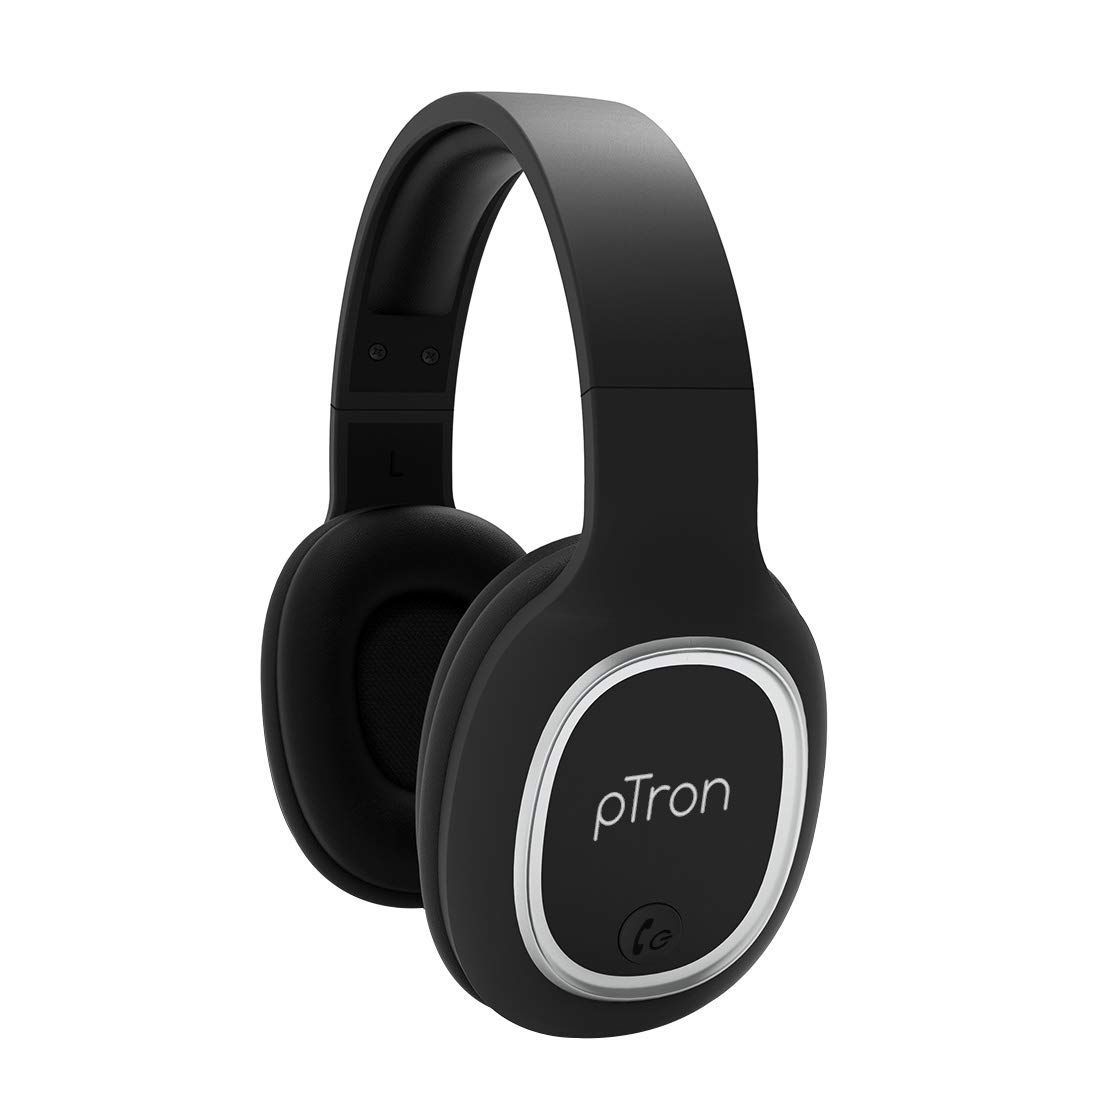 pTron Studio Over The Ear Wireless Bluetooth Headphones with Mic 